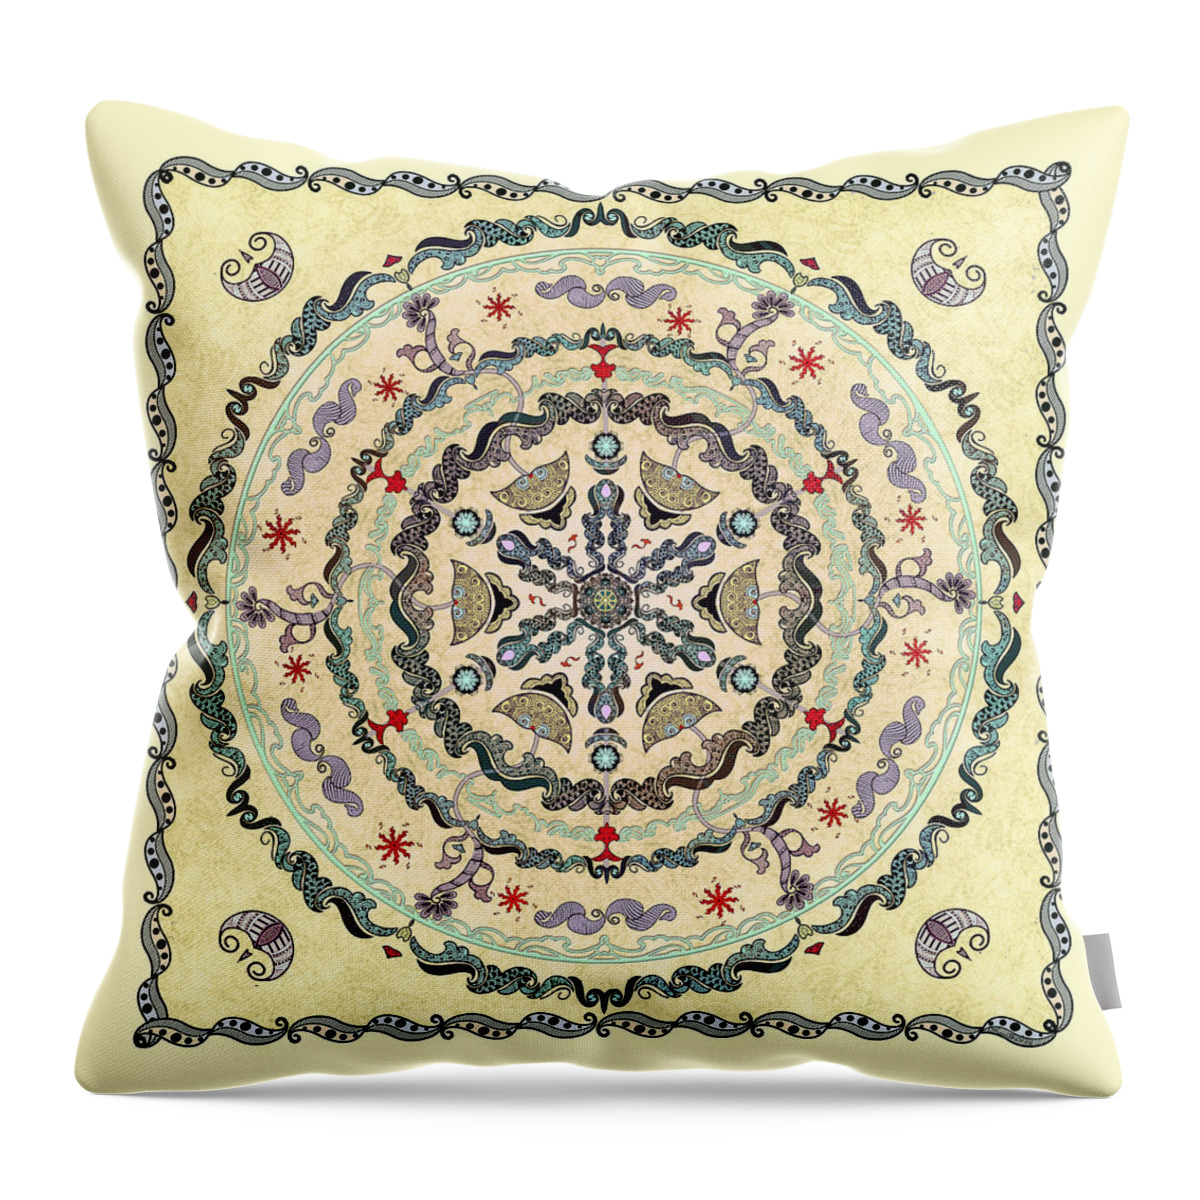 Mandala Throw Pillow featuring the digital art The Source Mandala 2 by Deborah Smith